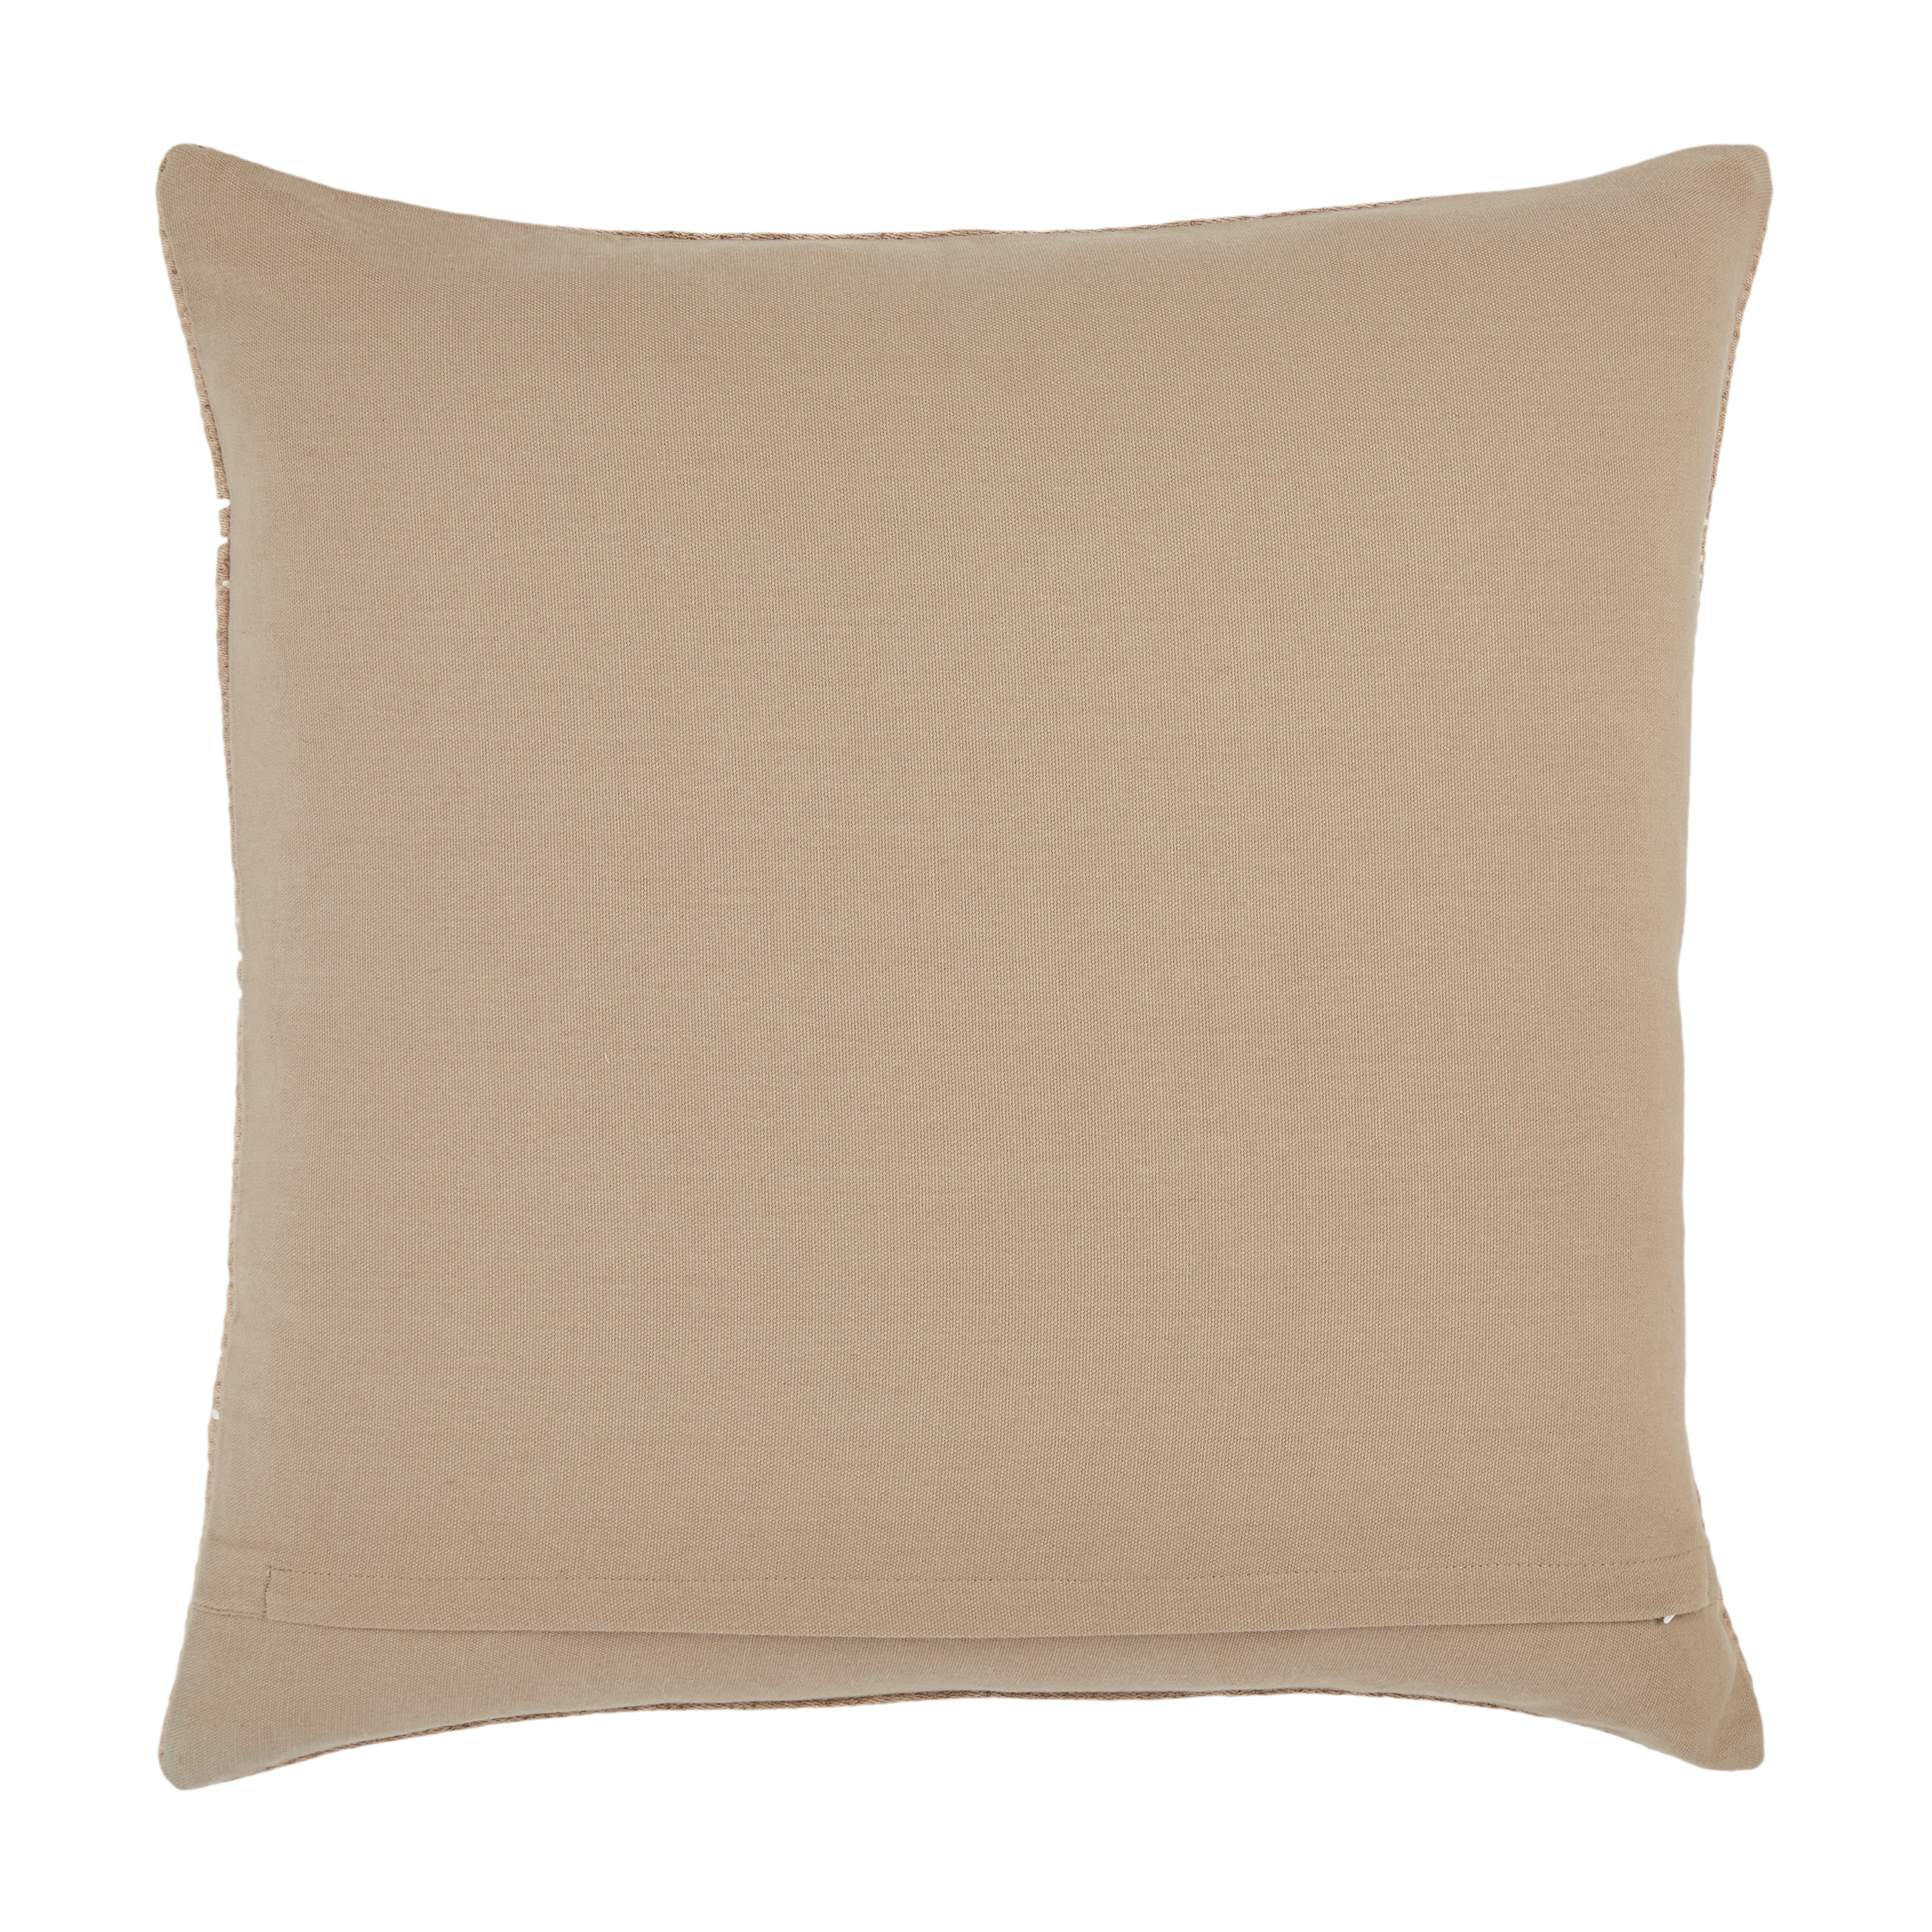 Design (US) Taupe 20"X20" Pillow - Image 1